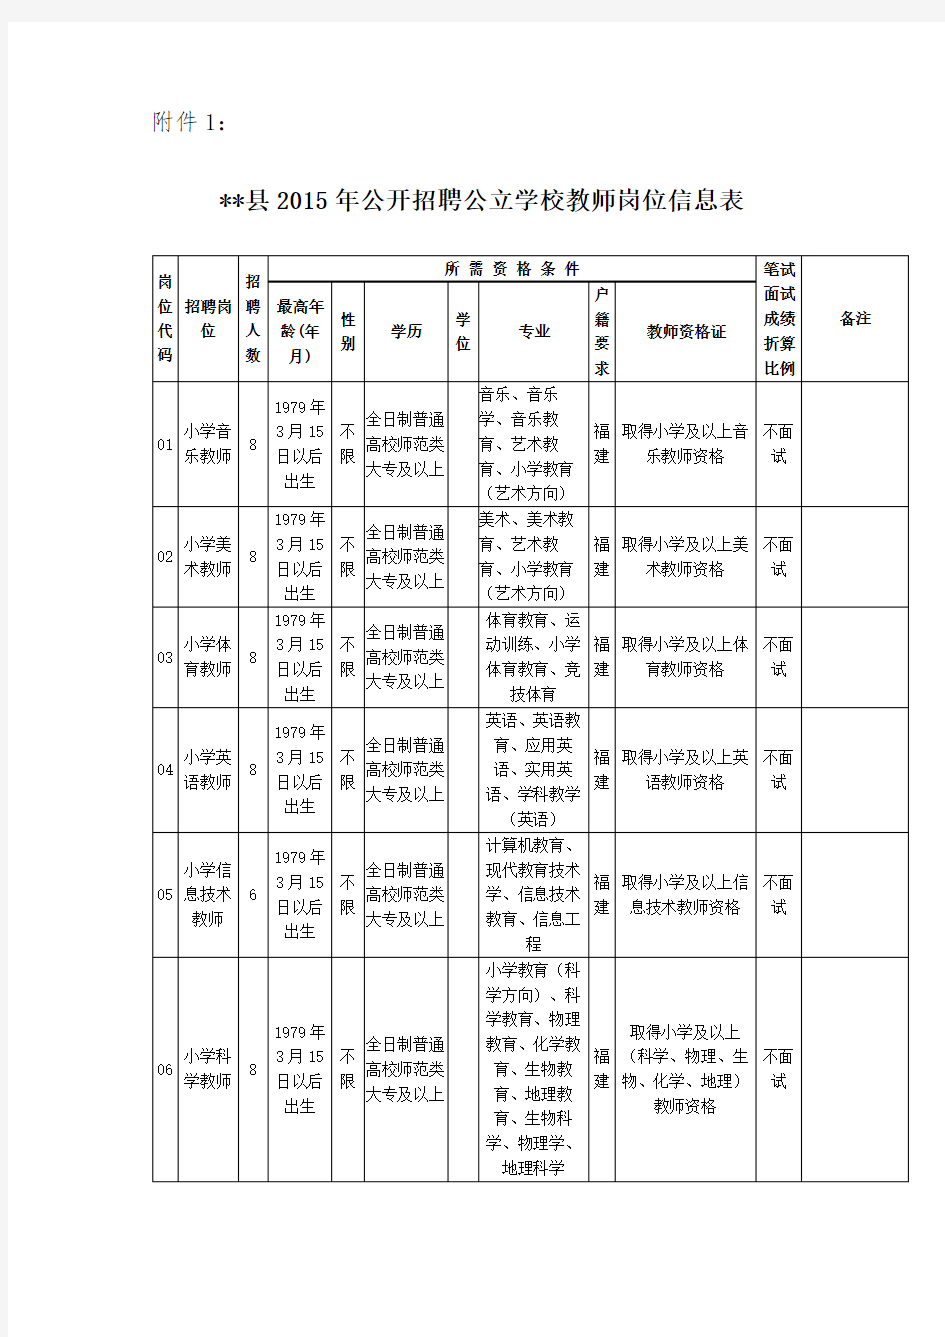 XX县2015年公开招聘公立学校教师岗位信息表【模板】